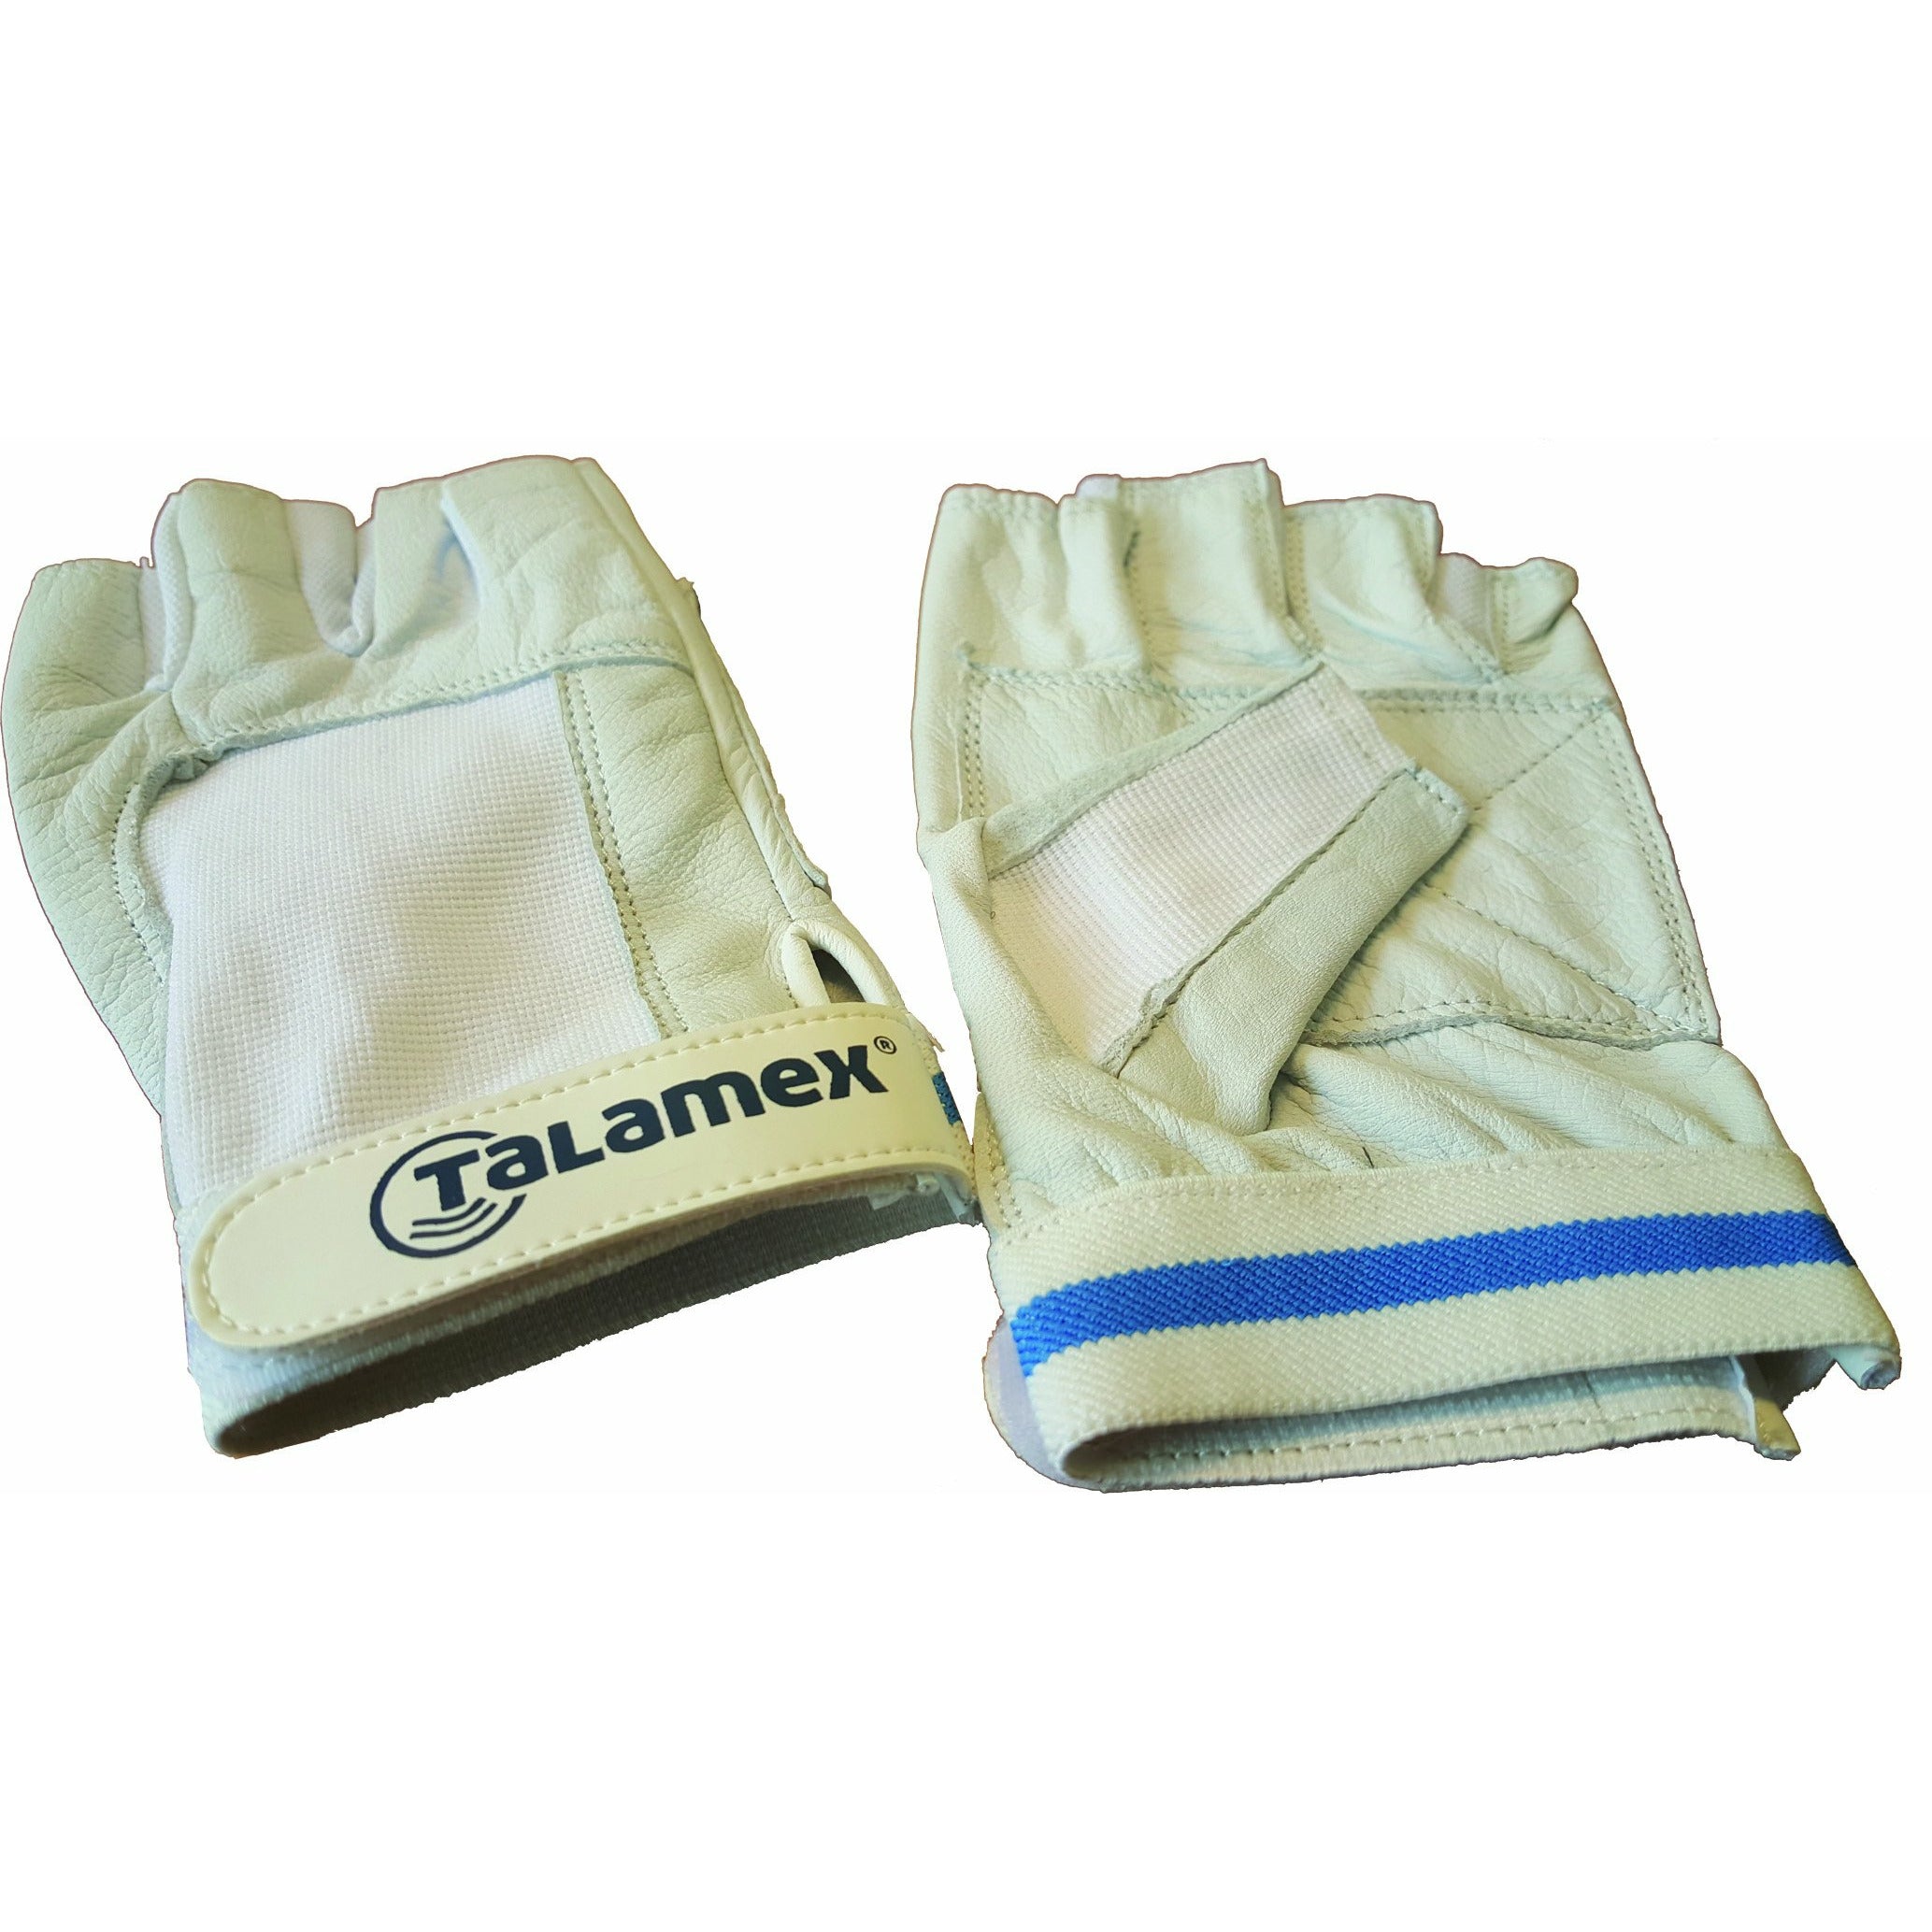 Talamex S'Gloves Open Medium 20802002